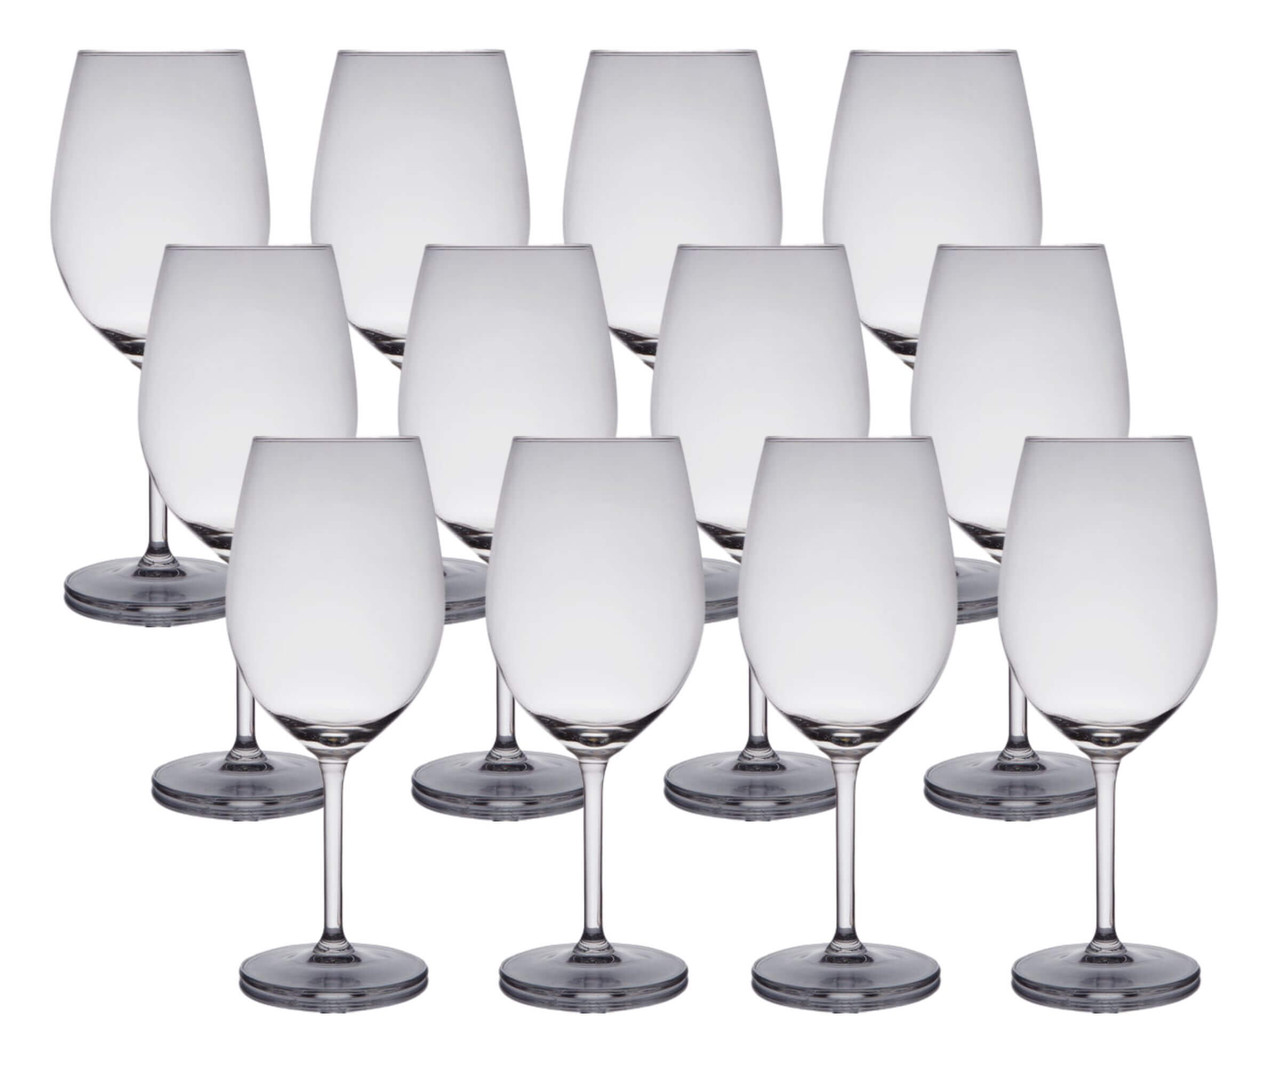 Libbey Allure Set of 12 Wine Glasses - 18 oz.-Chicken Pieces